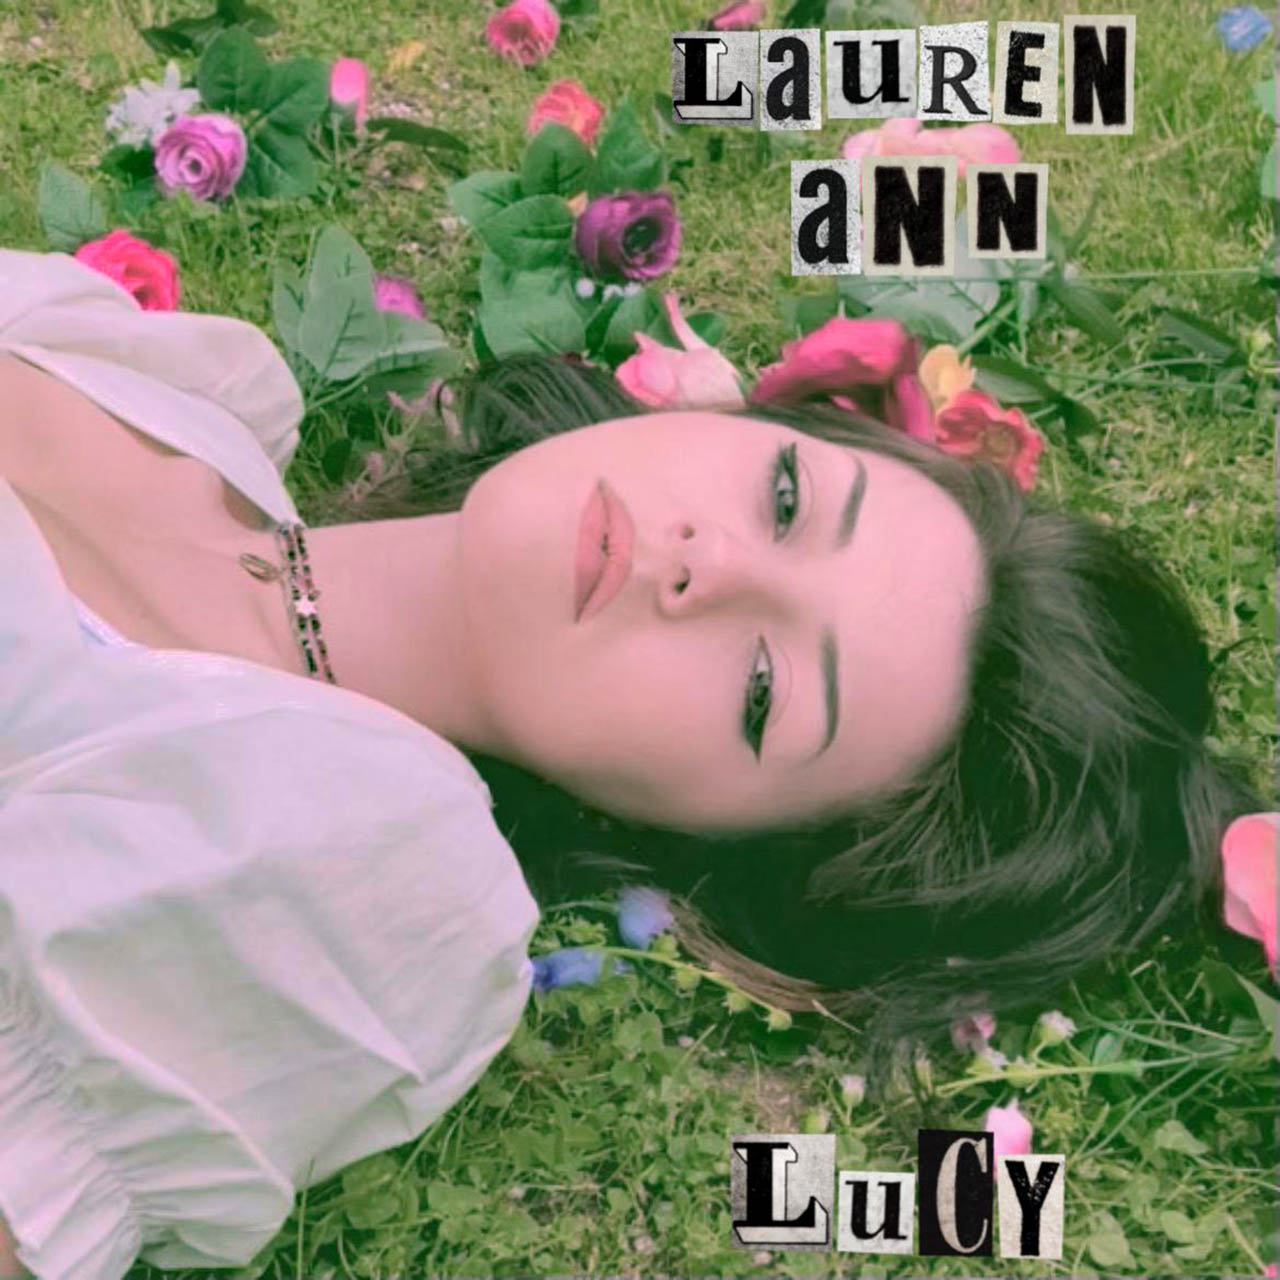 Lauren Ann - Lucy